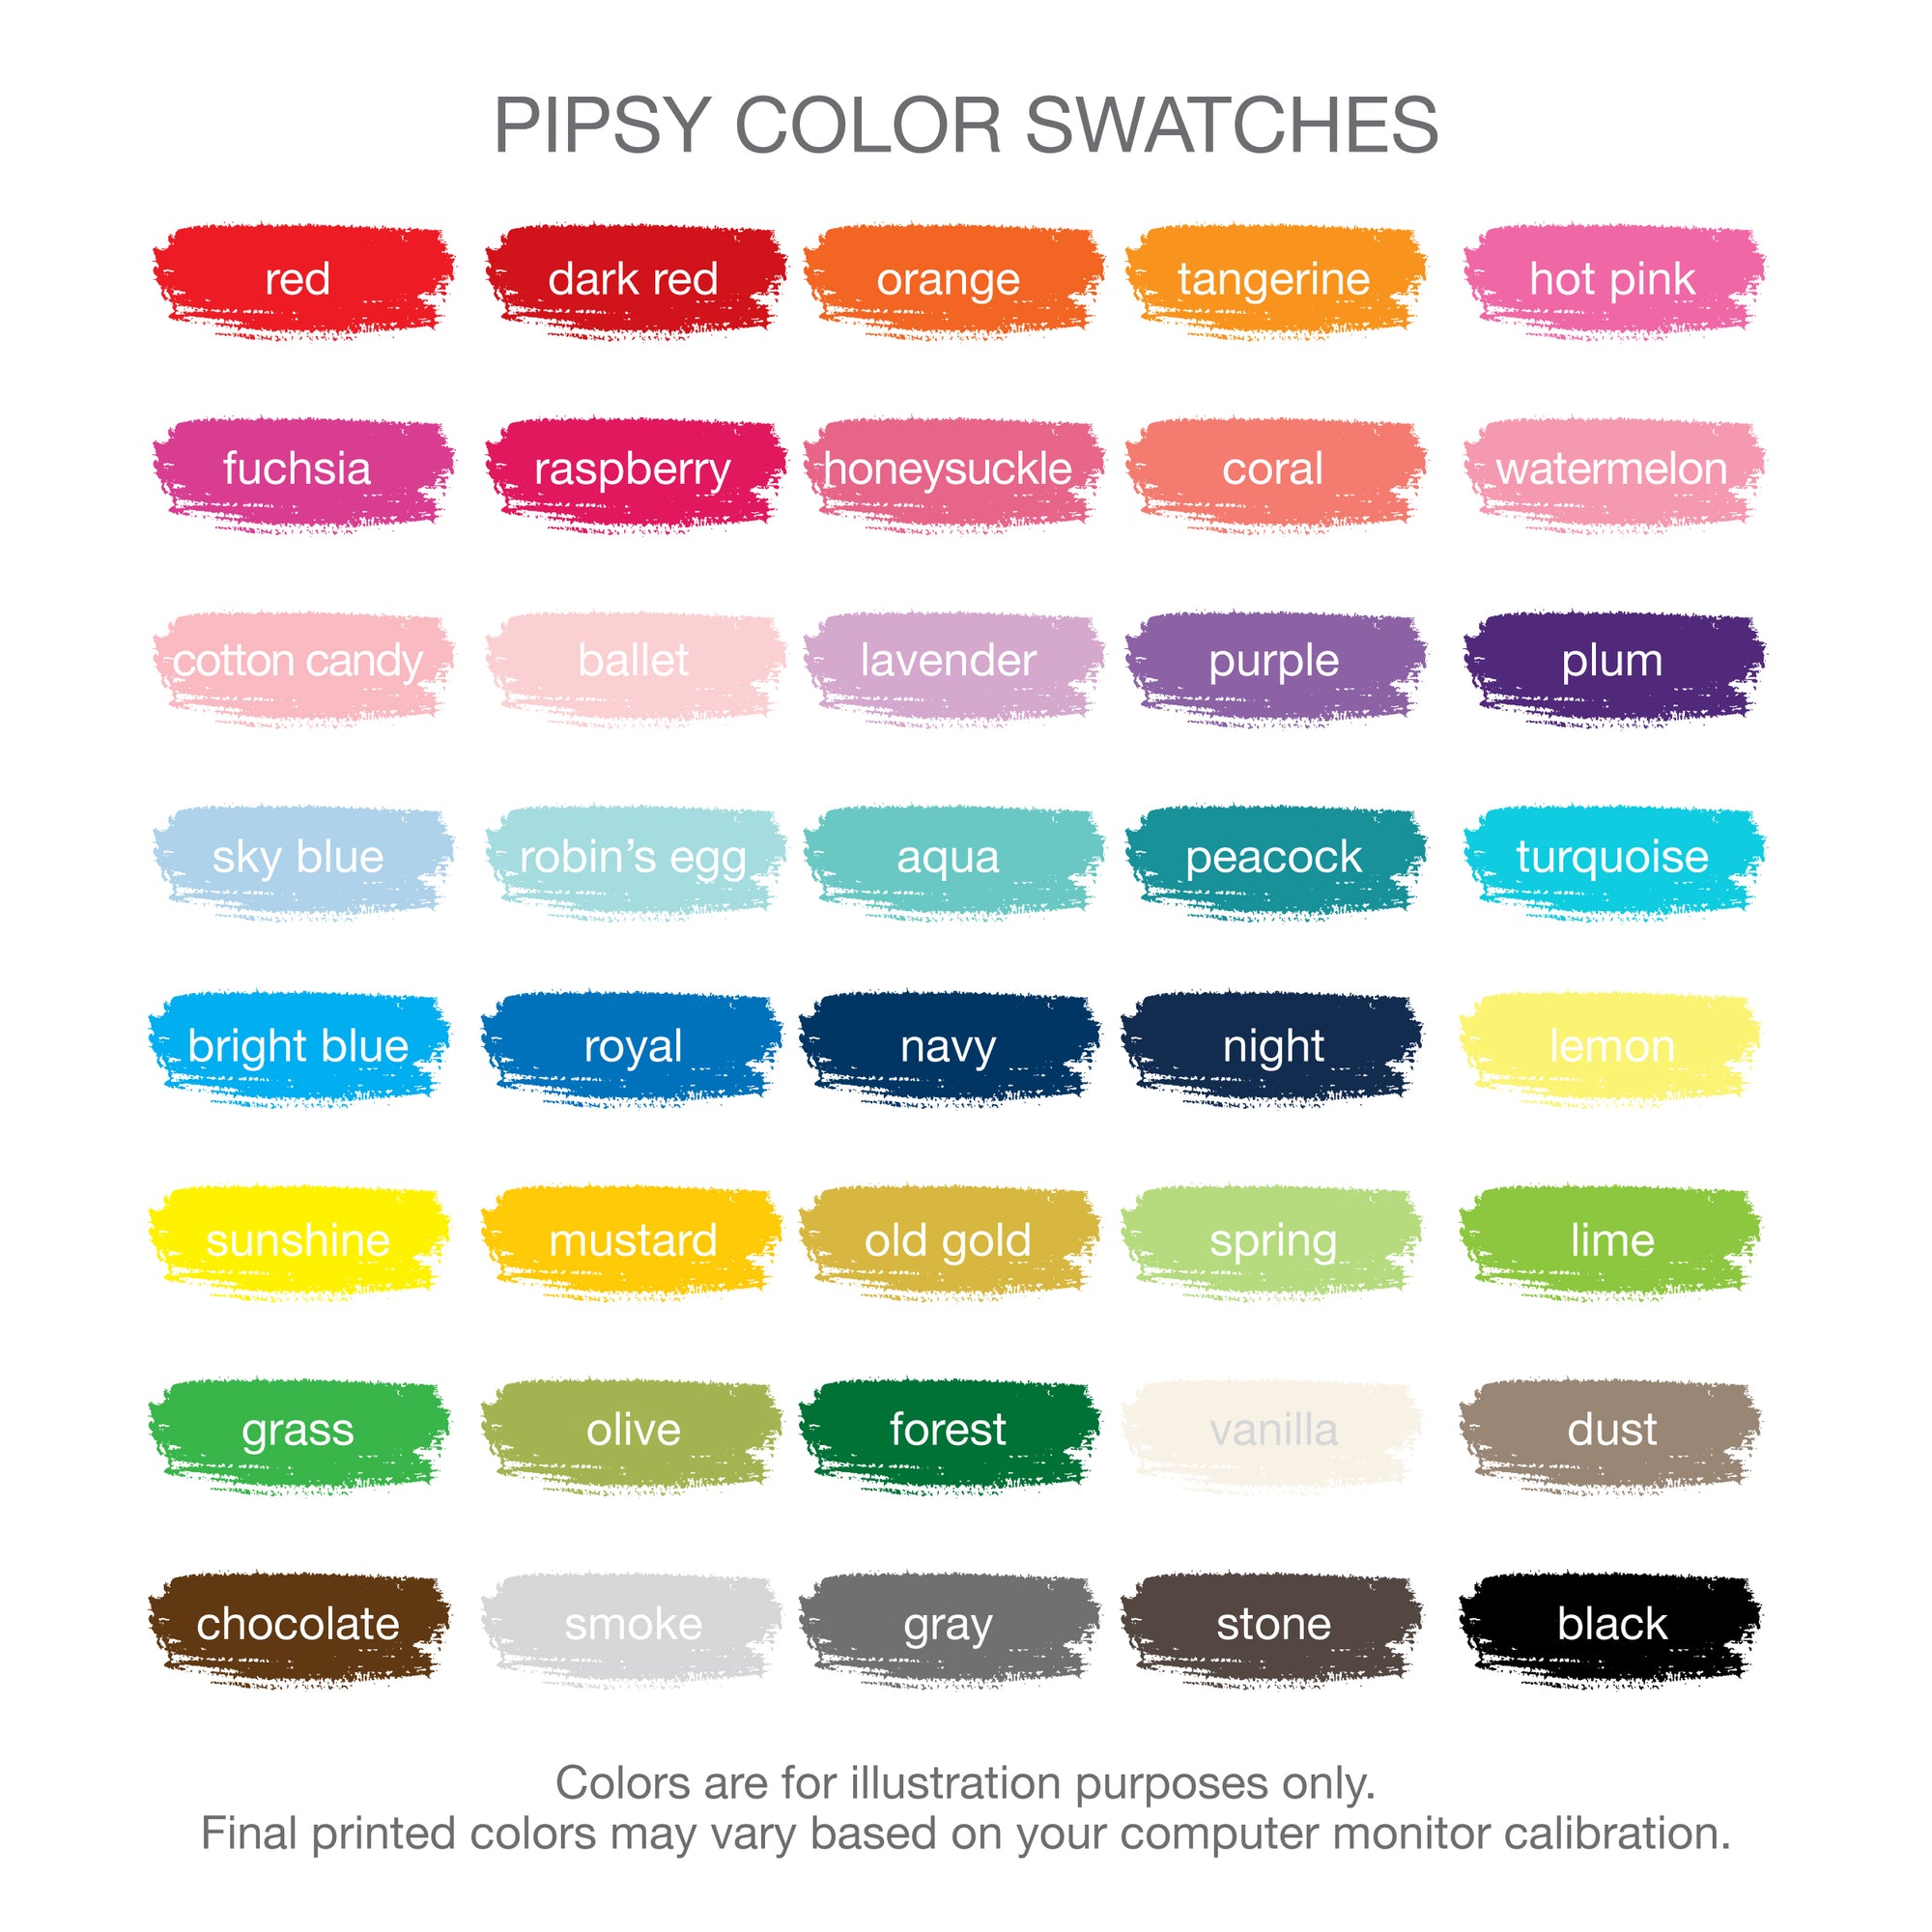 Choose your custom colors, pipsy.com